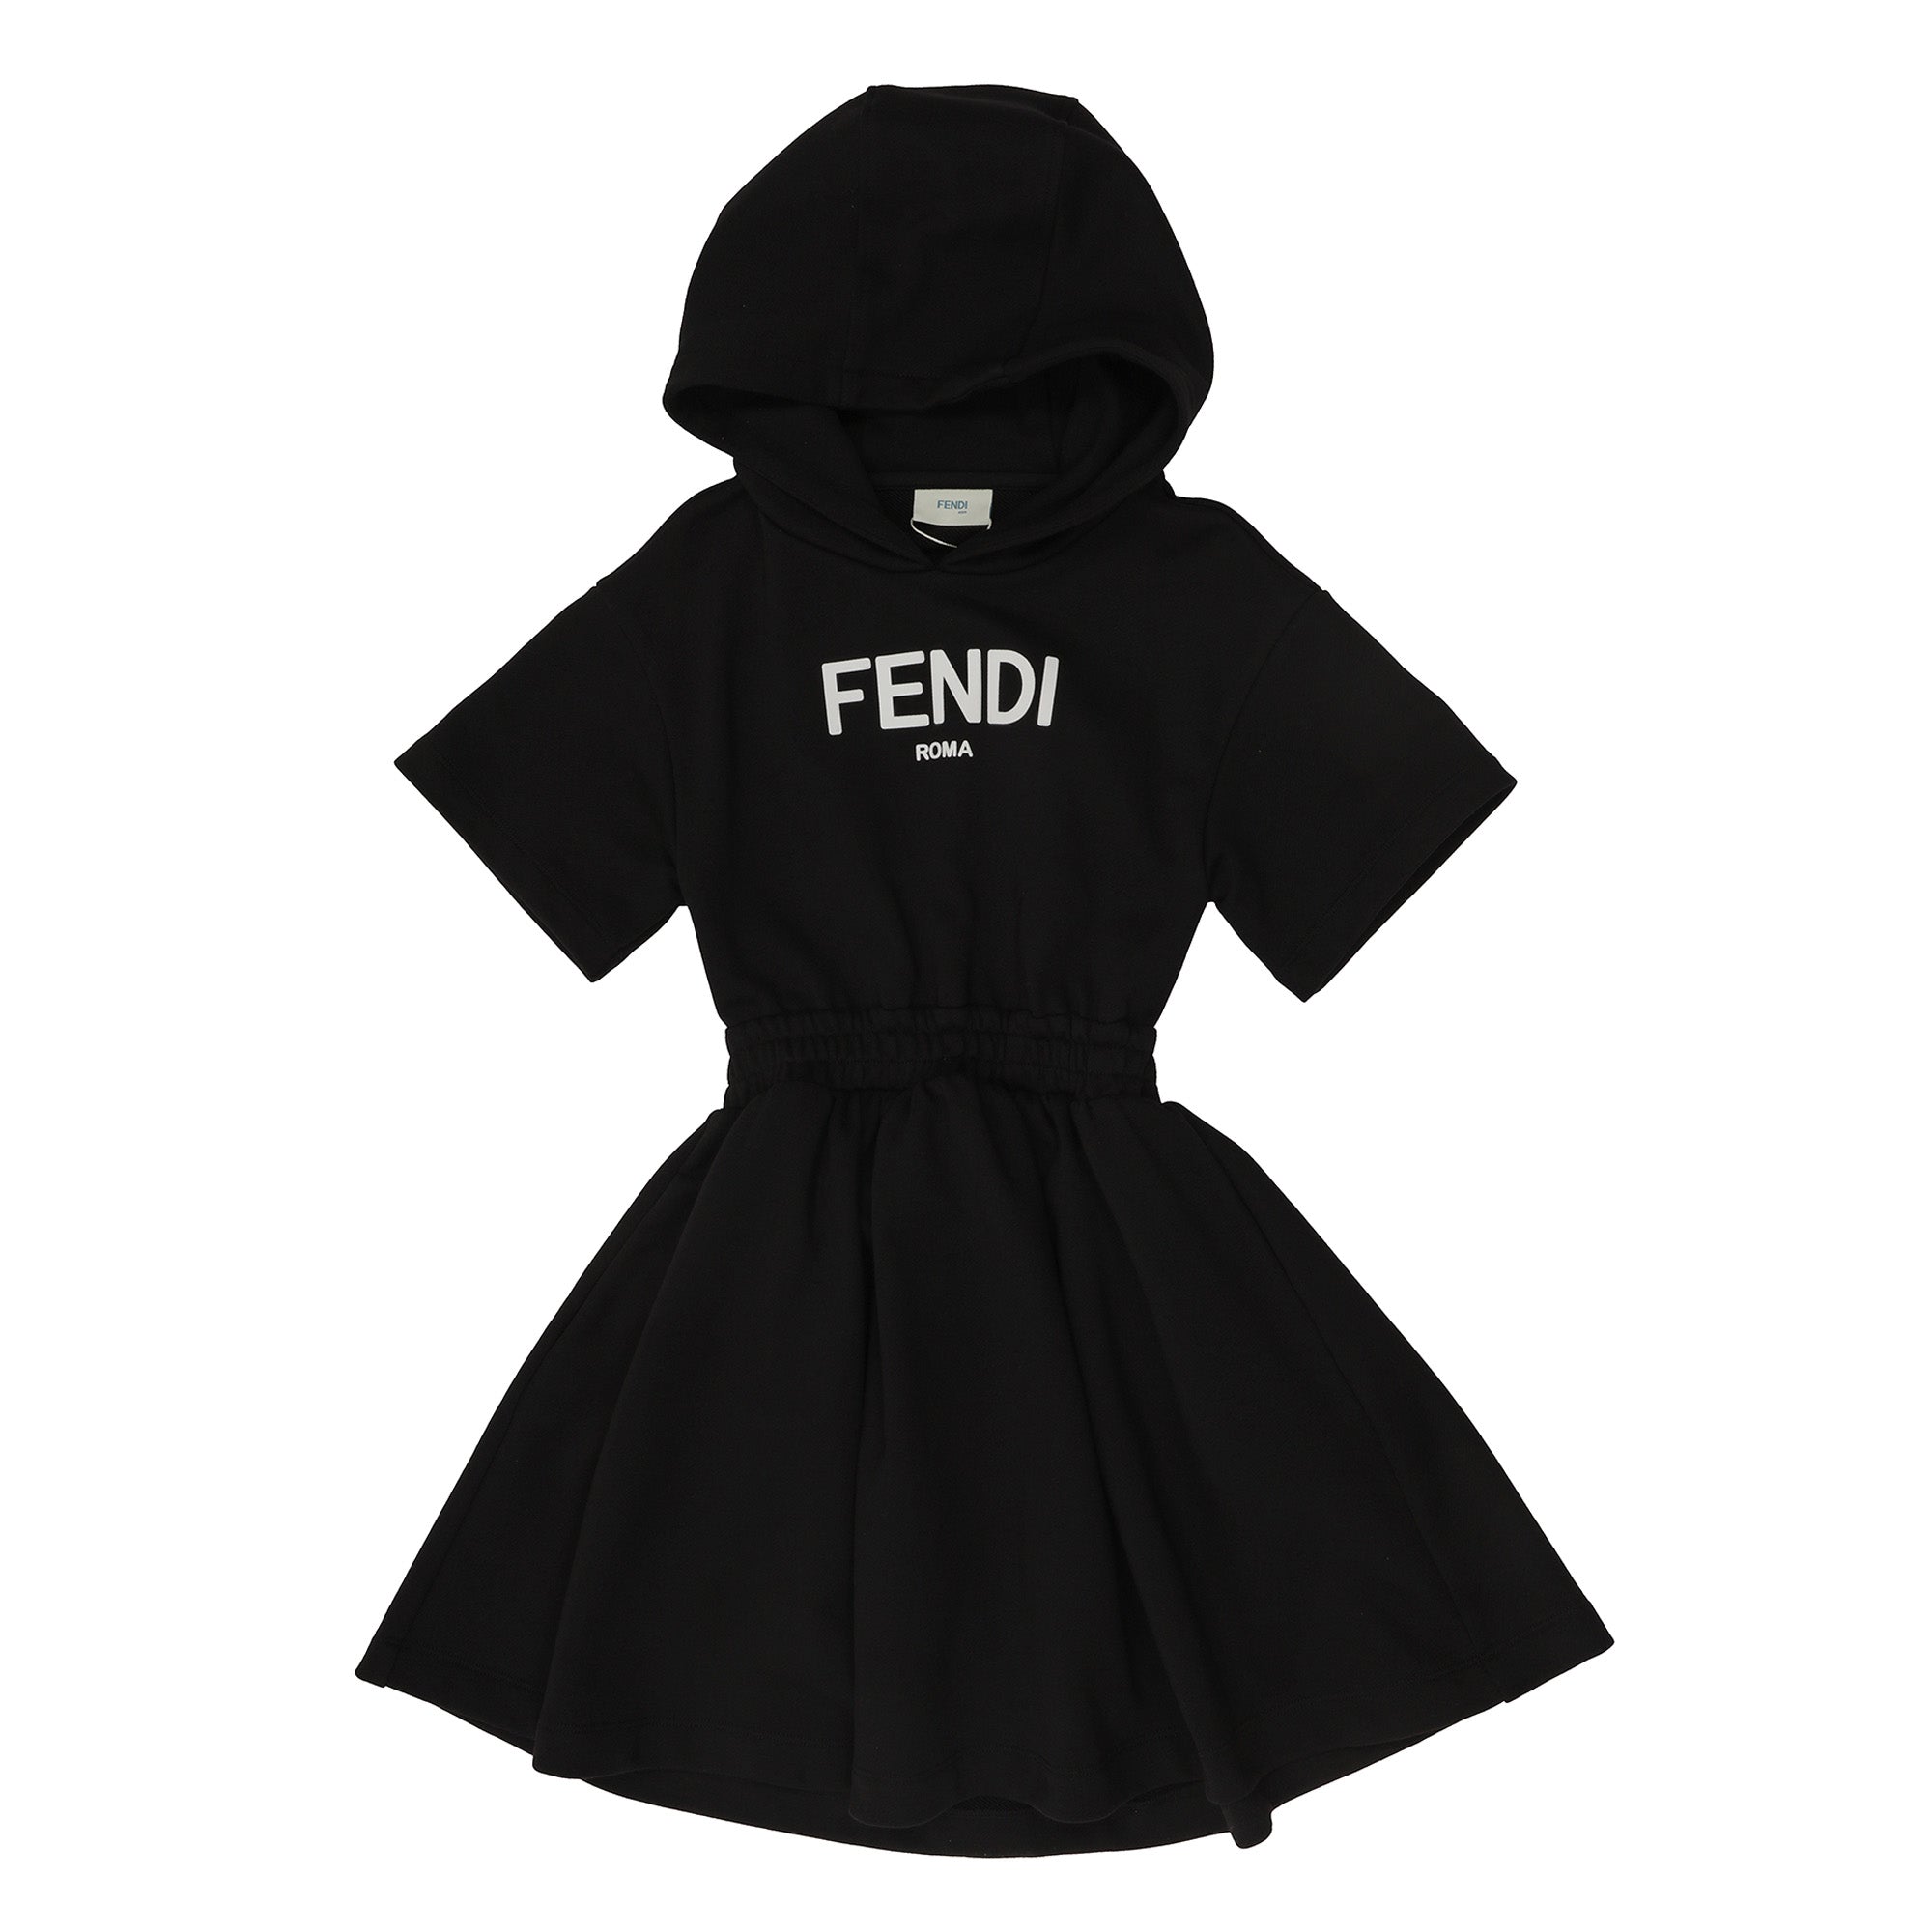 Fendi Black Hooded Dress